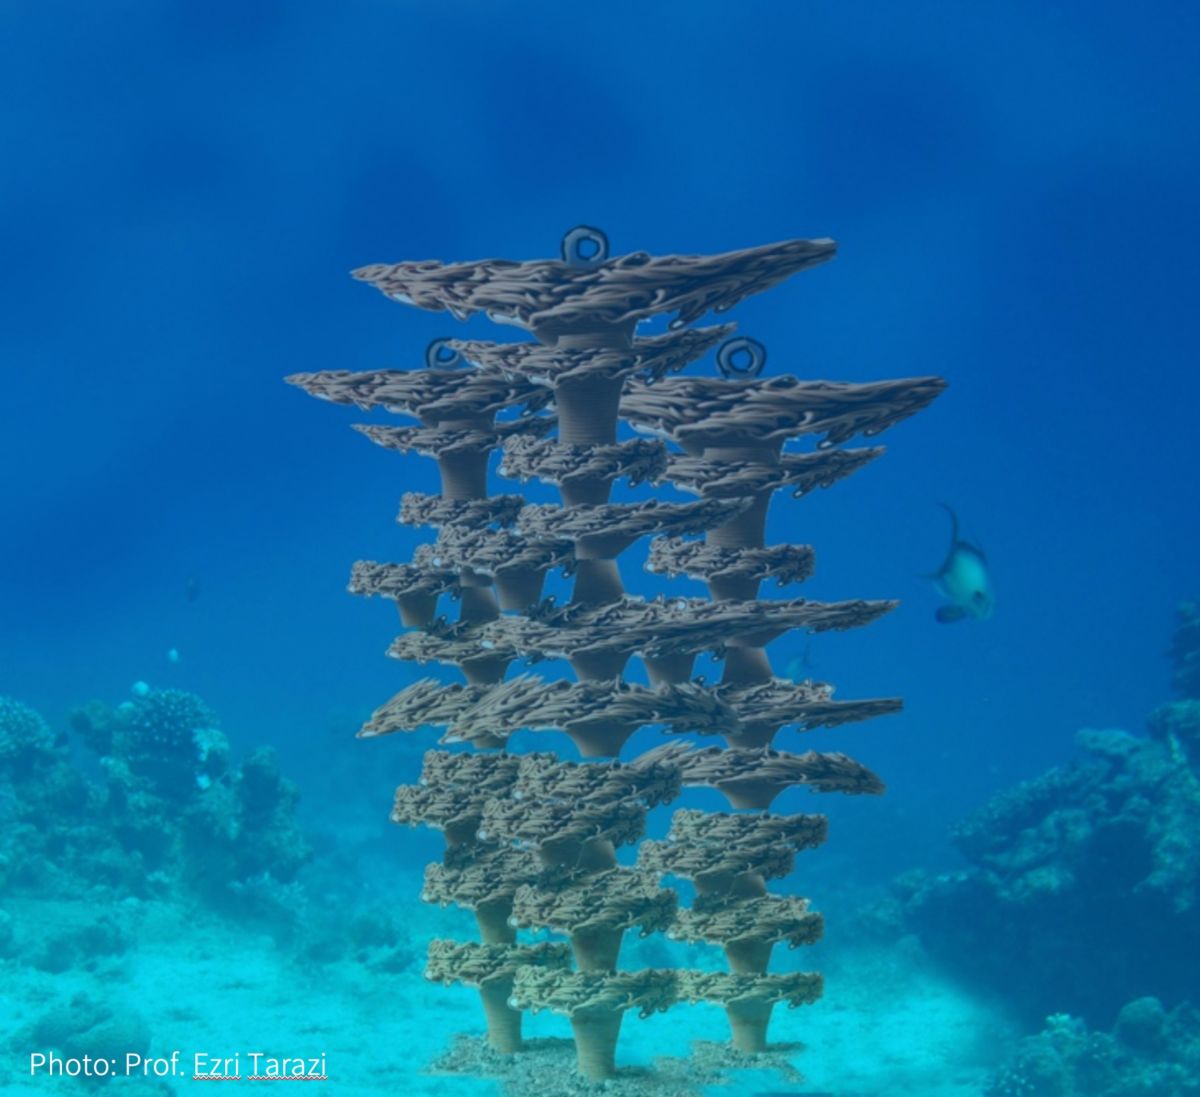 3D artificial reef